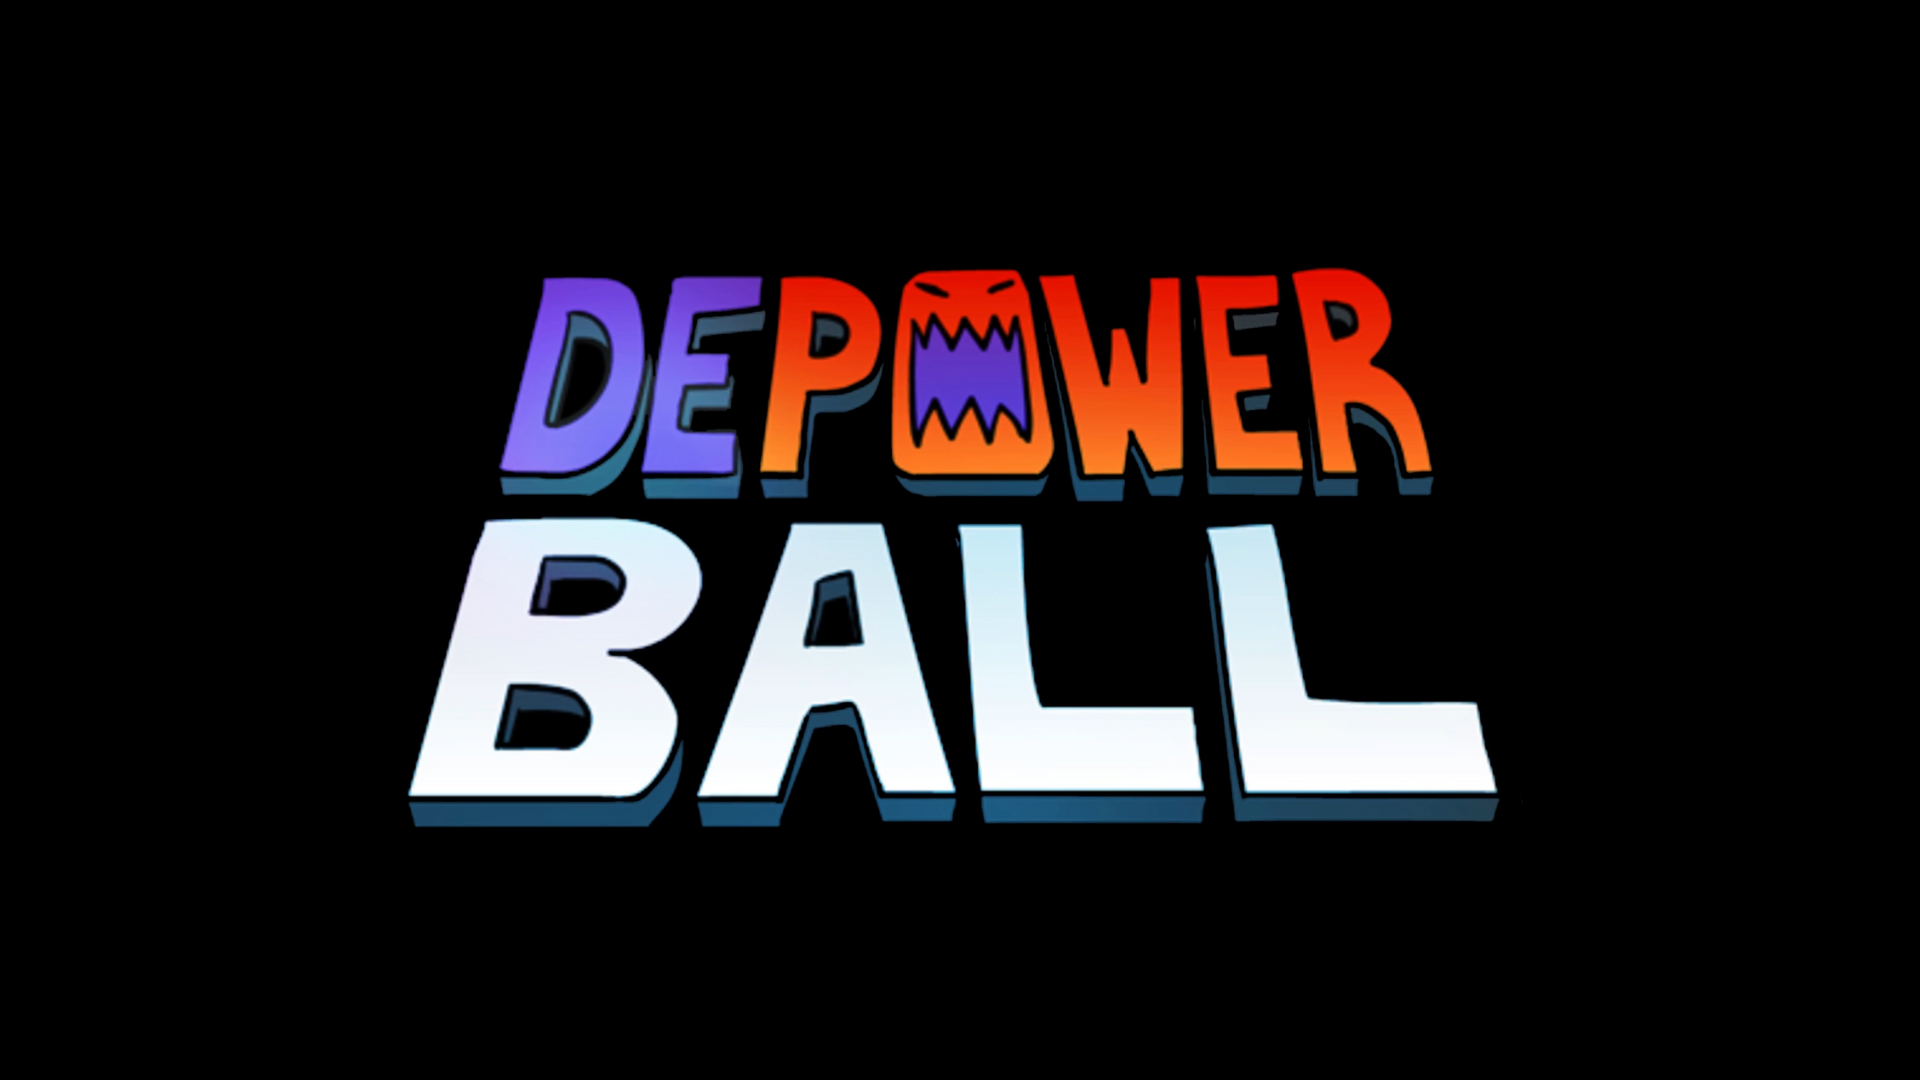 Depowerball